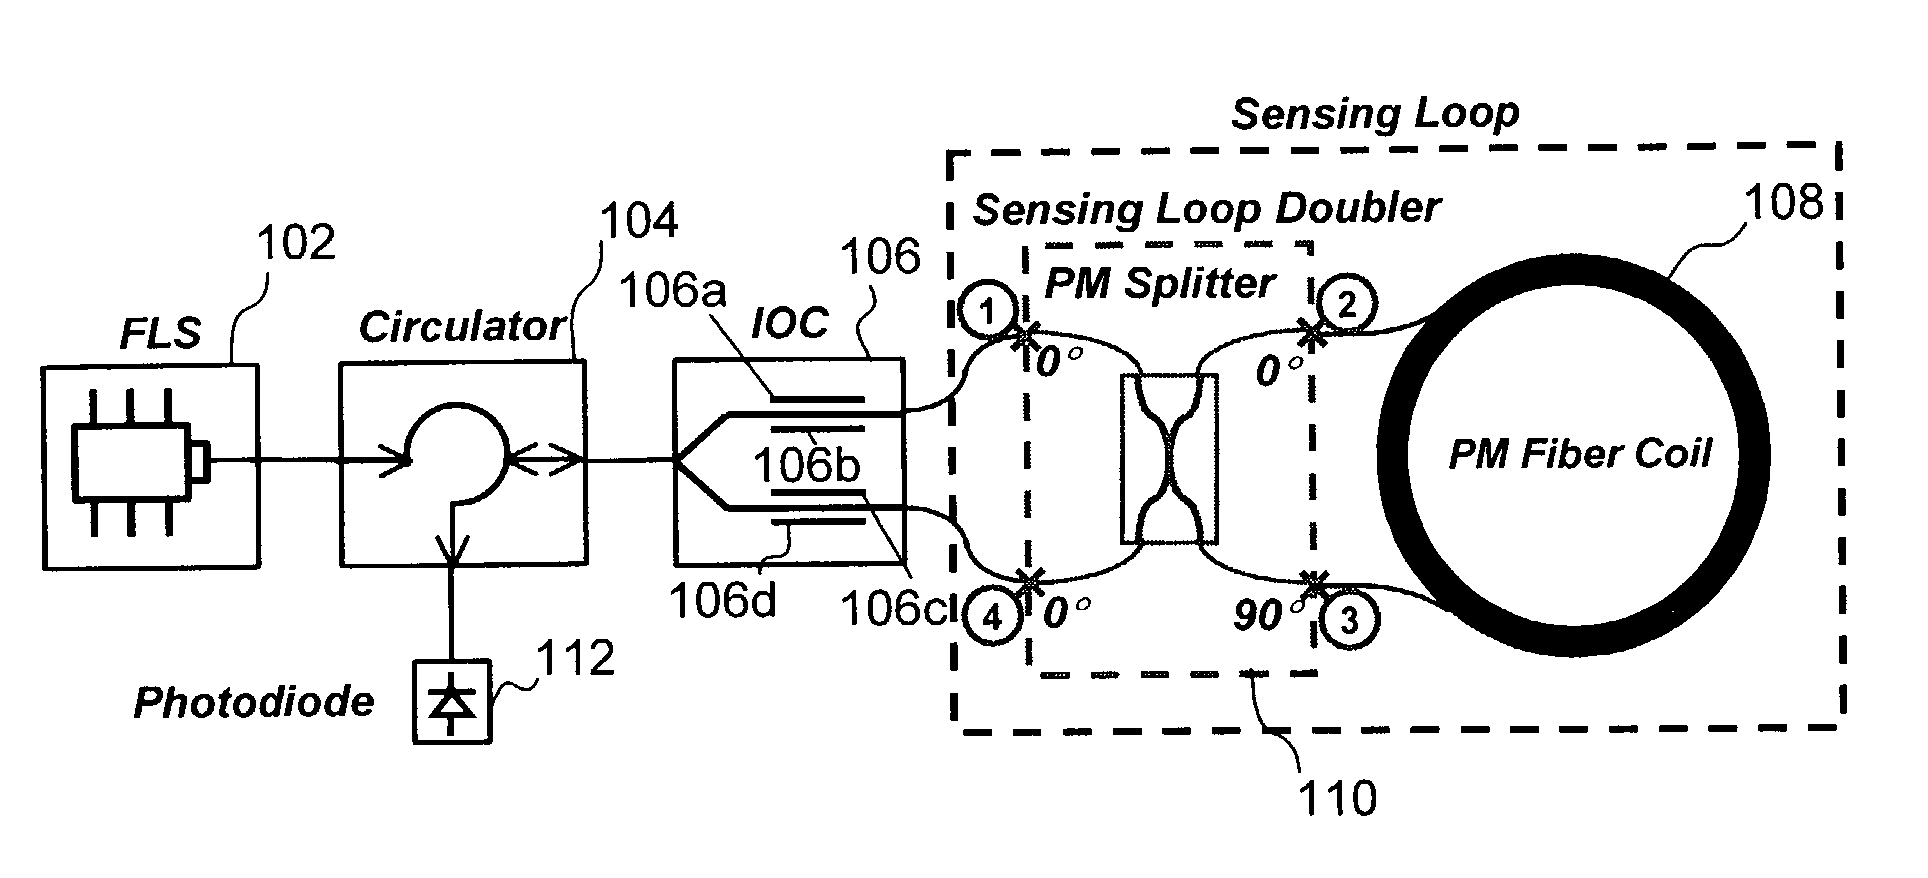 Fiber optic gyroscope sensing loop doubler